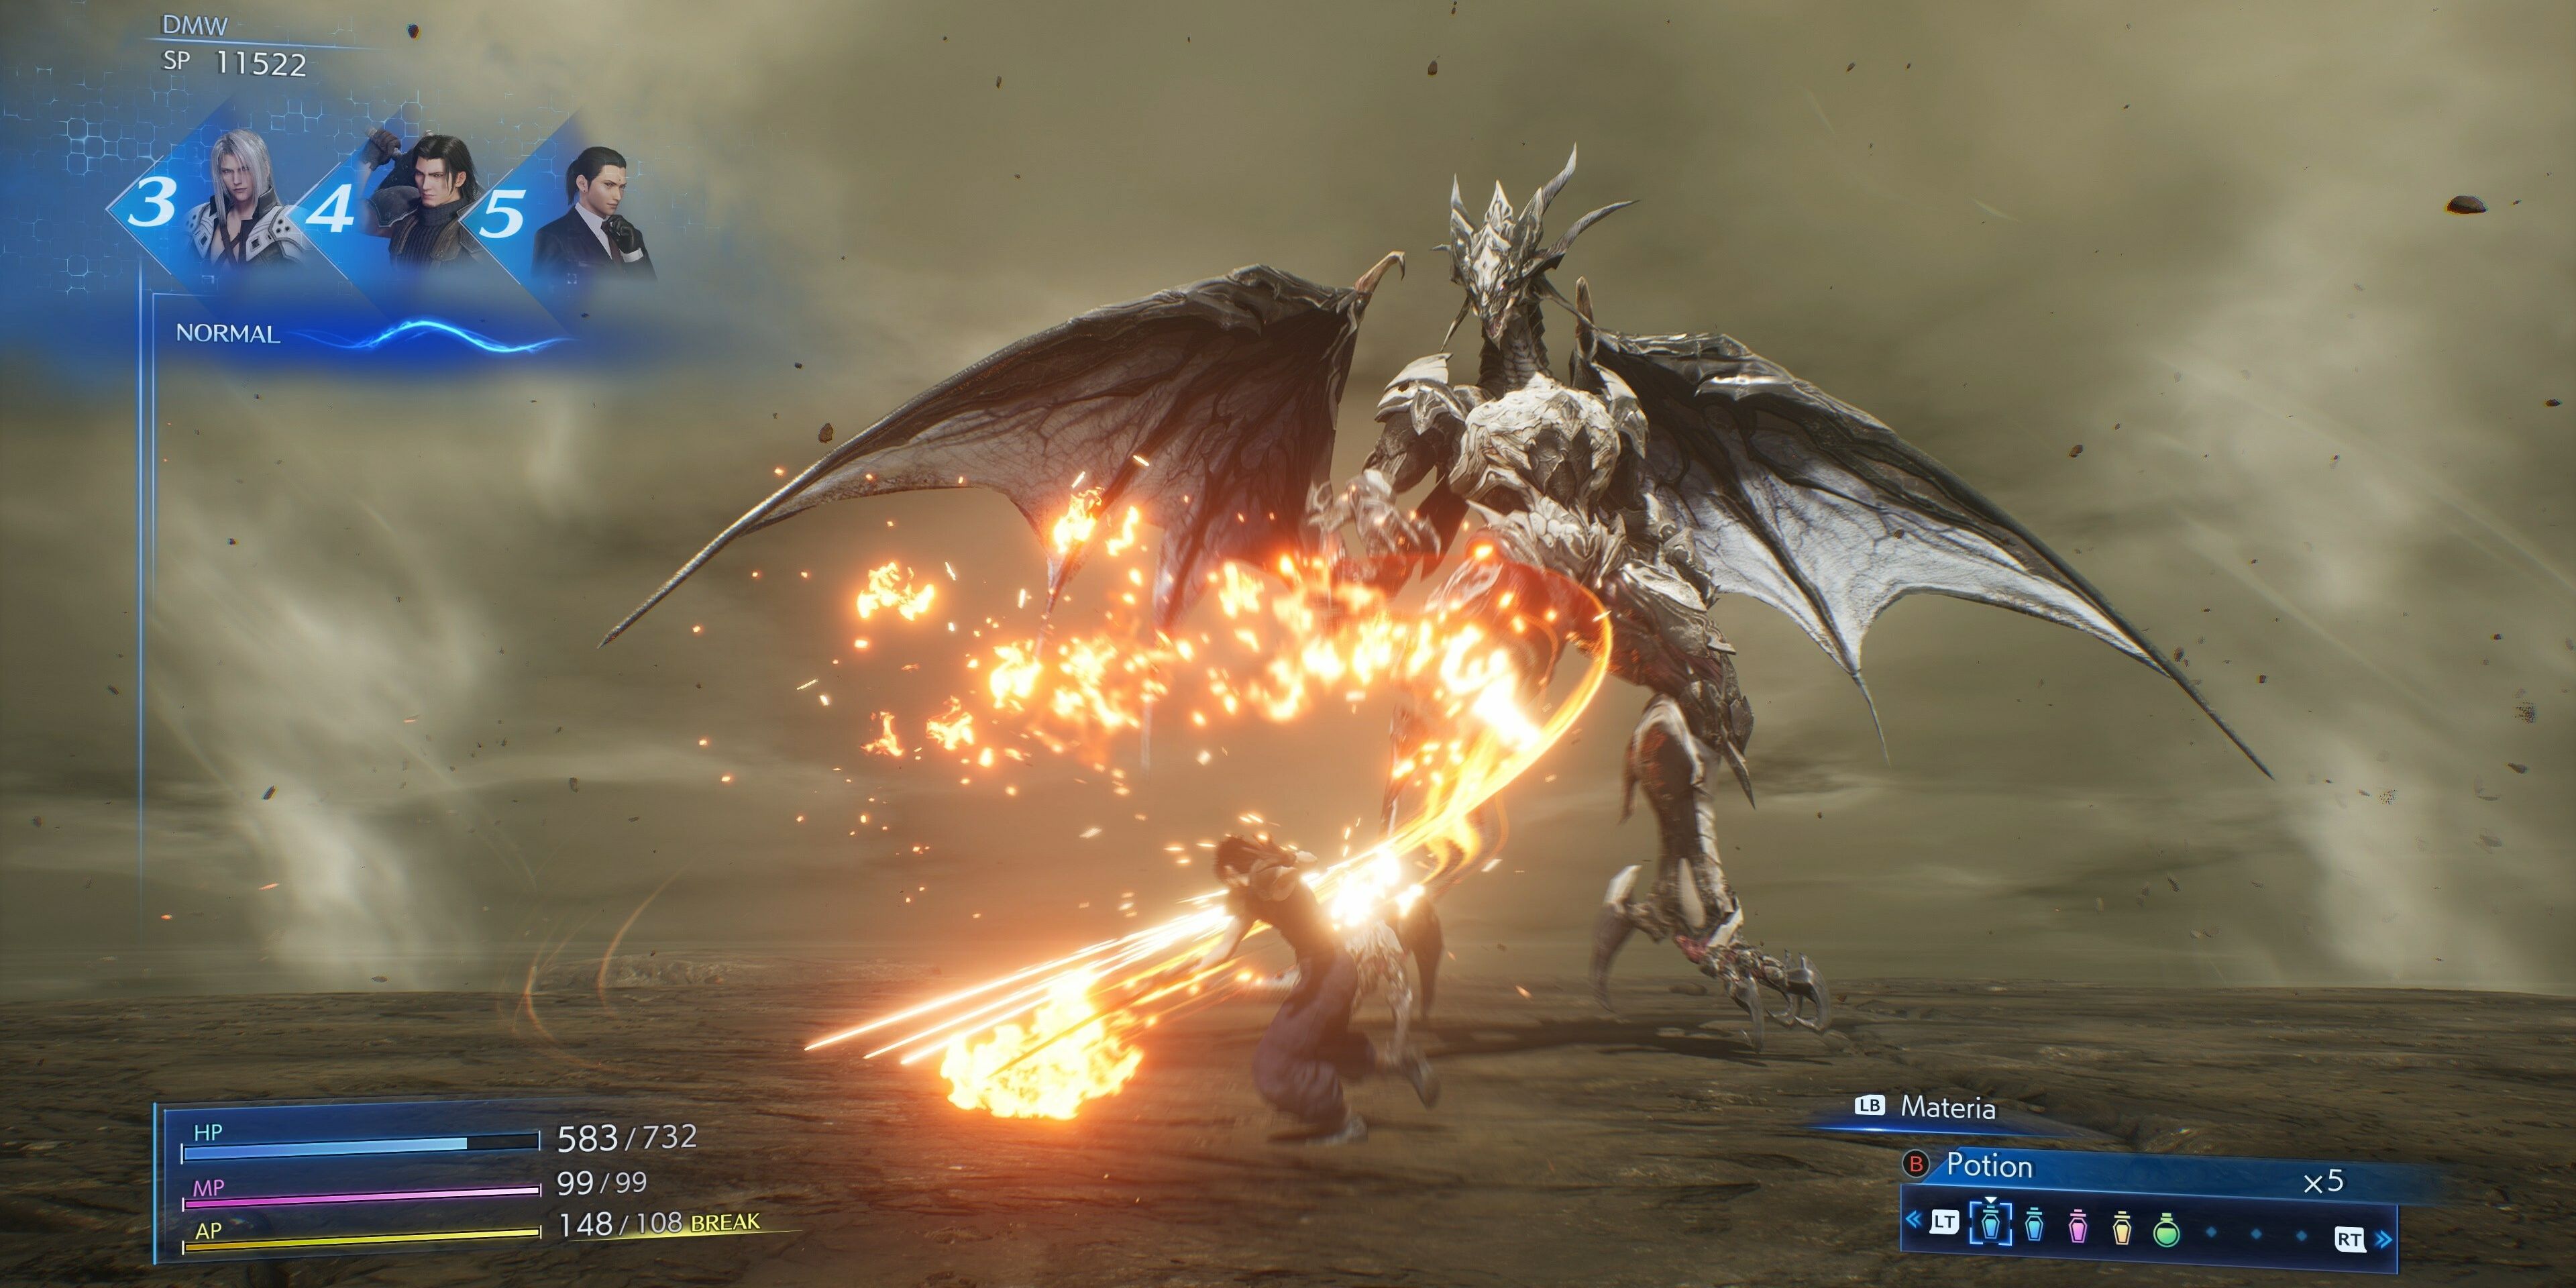 A screenshot of the battle UI in Crisis Core Final Fantasy 7 Reunion